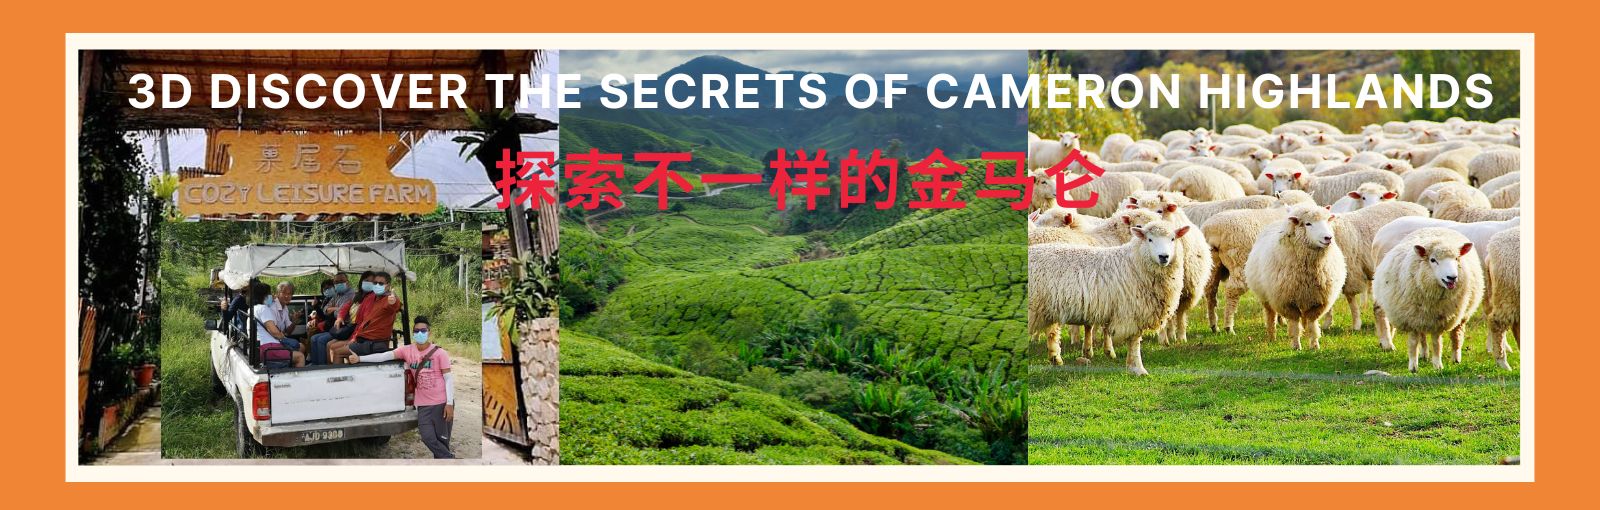 https://www.96travel.com.sg/tour?id=85&n=3d-discover-the-secrets-of-cameron-highlands